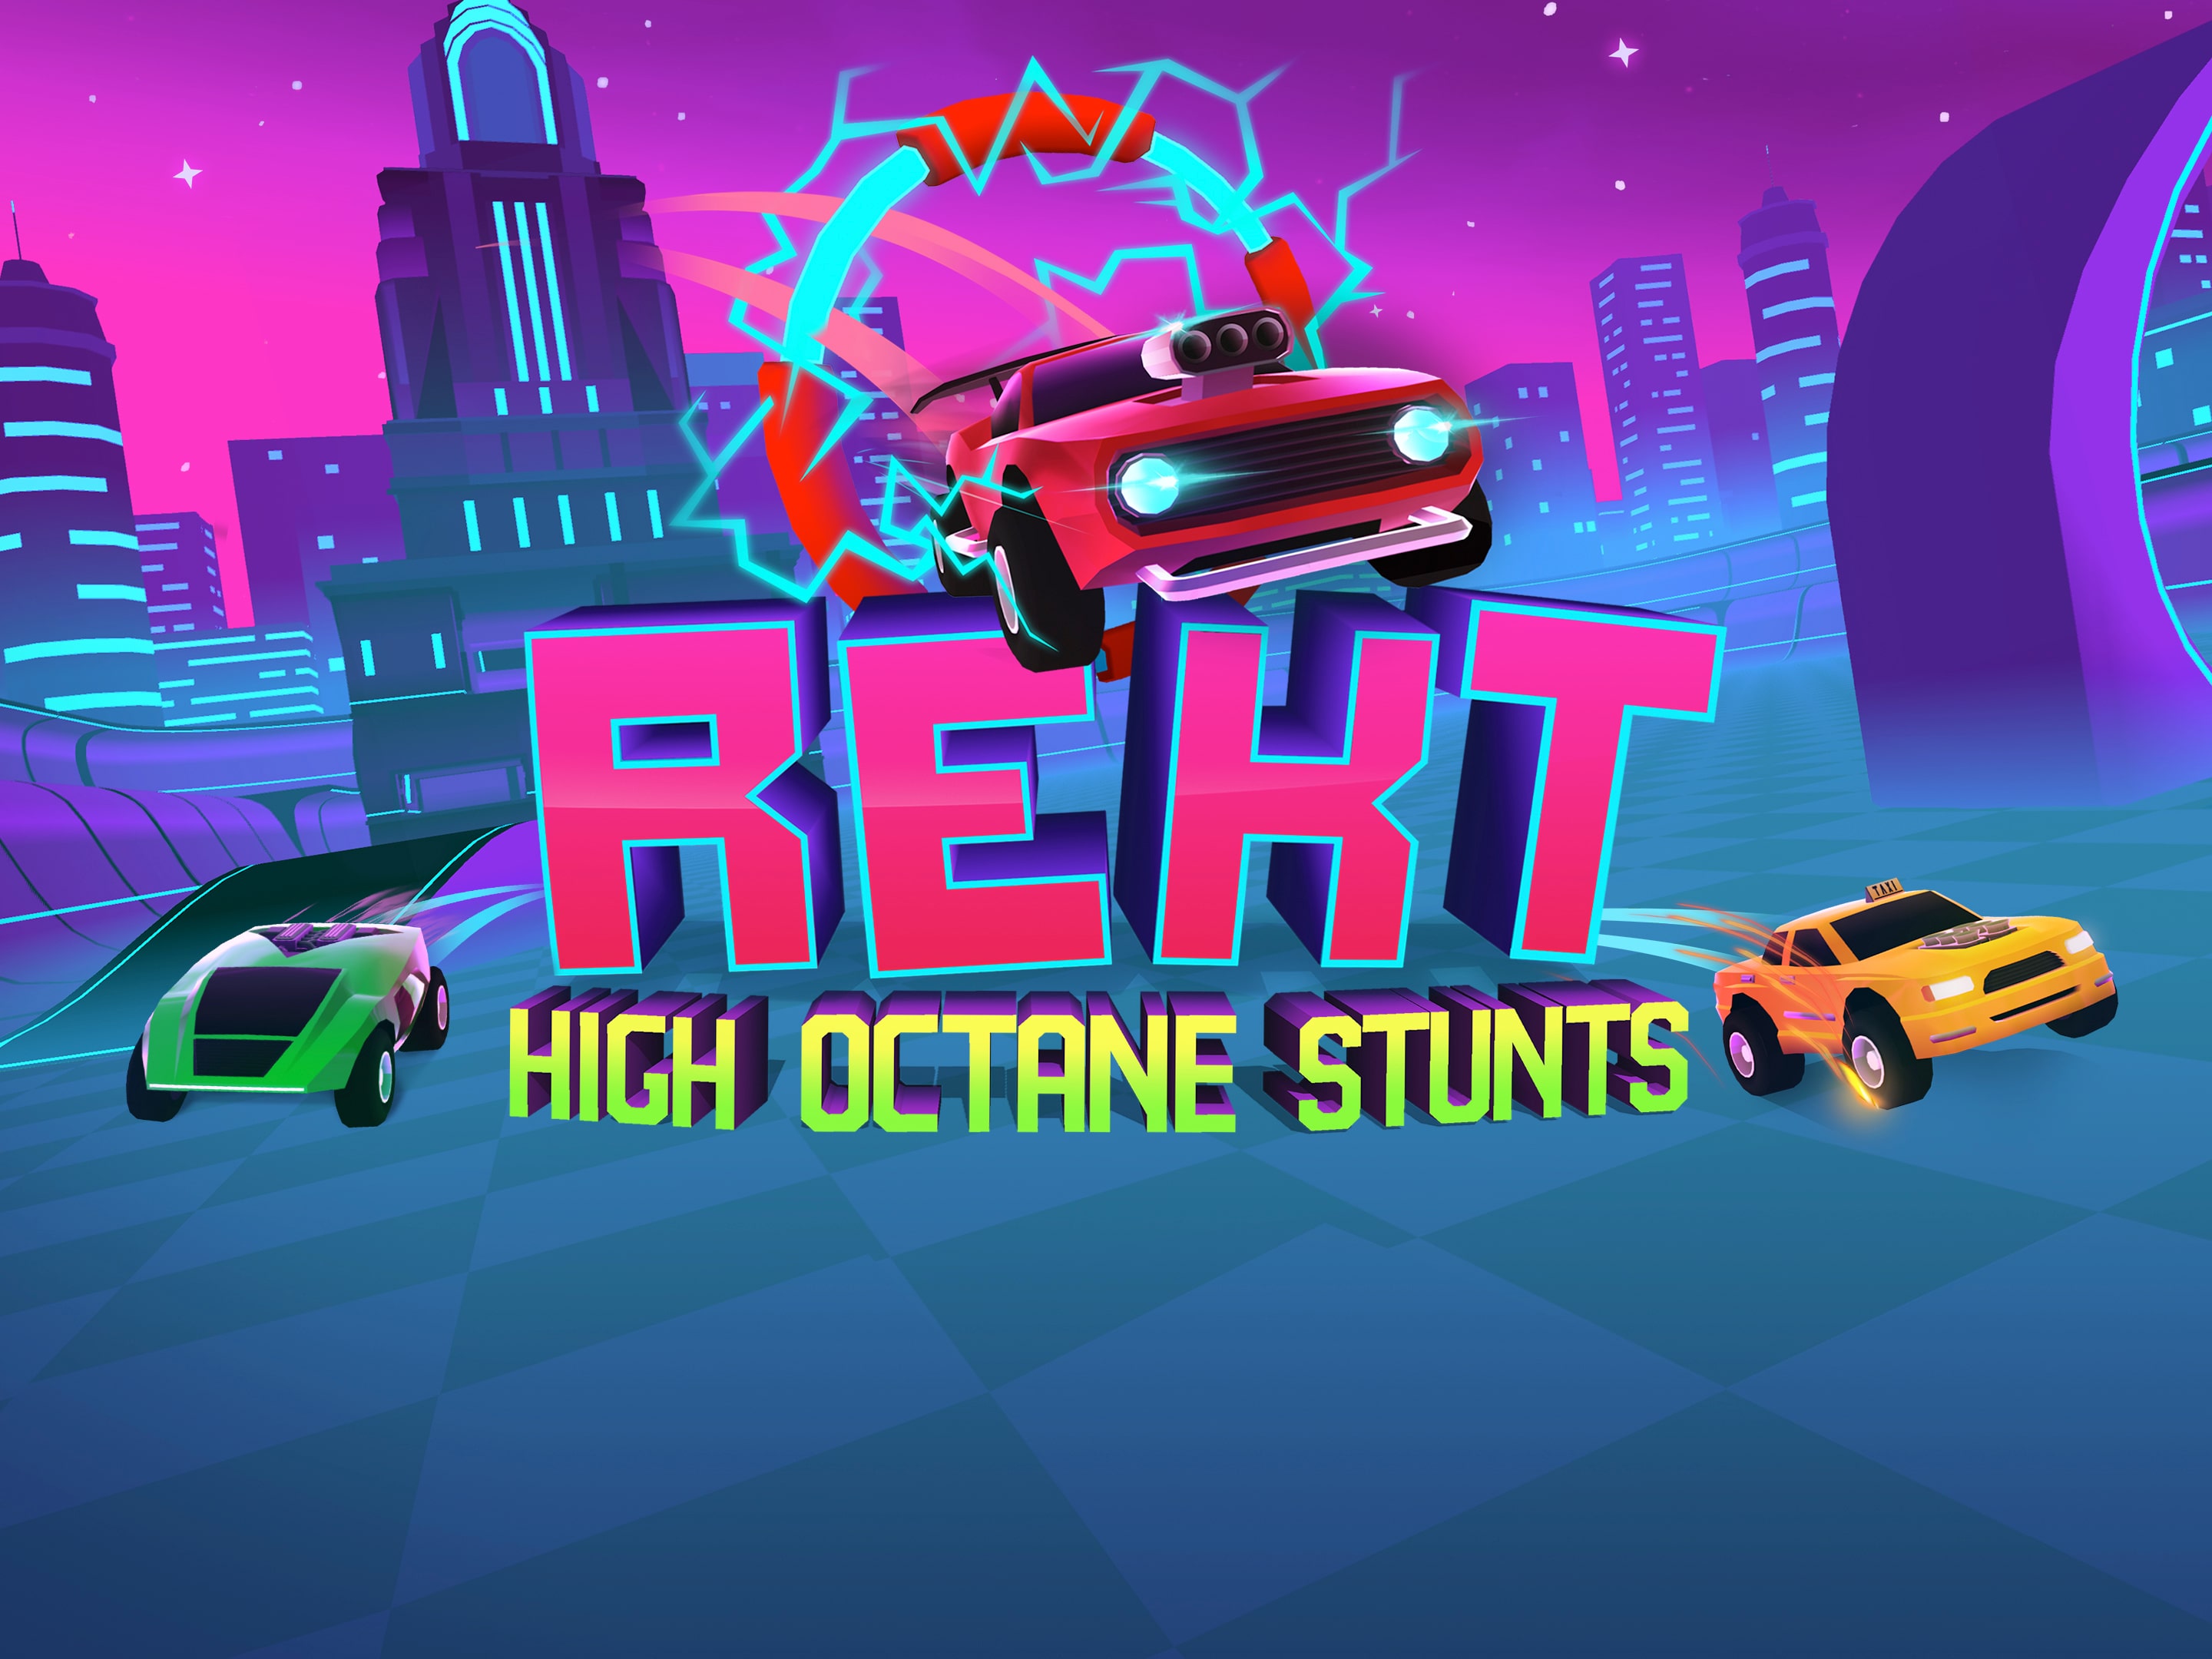 REKT! - High Octane Stunts - Apps on Google Play